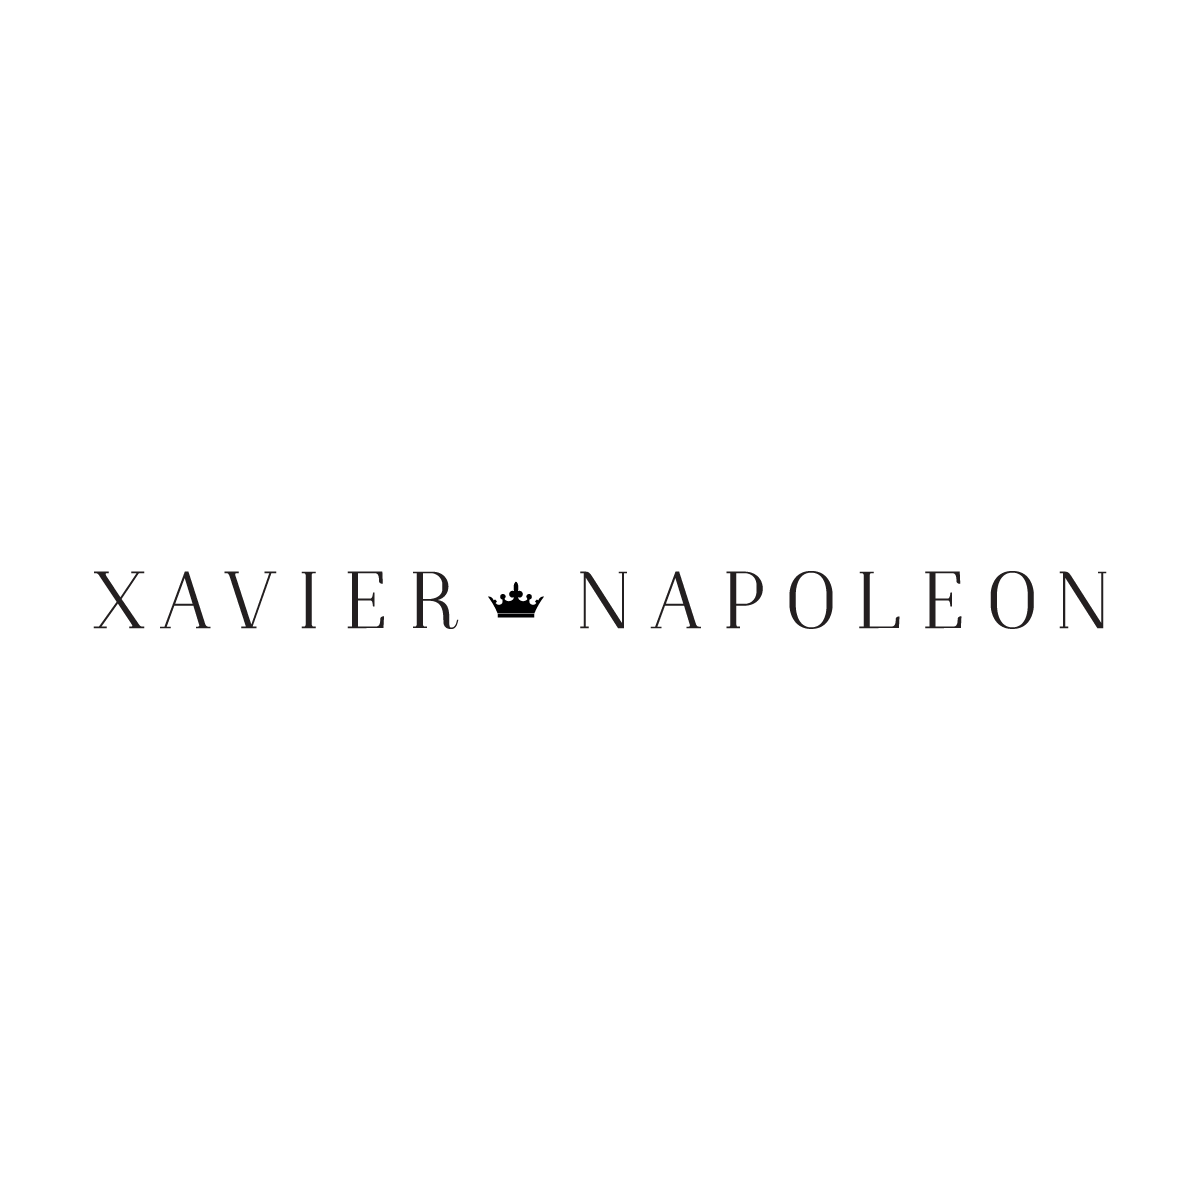 Xavier Napoleon